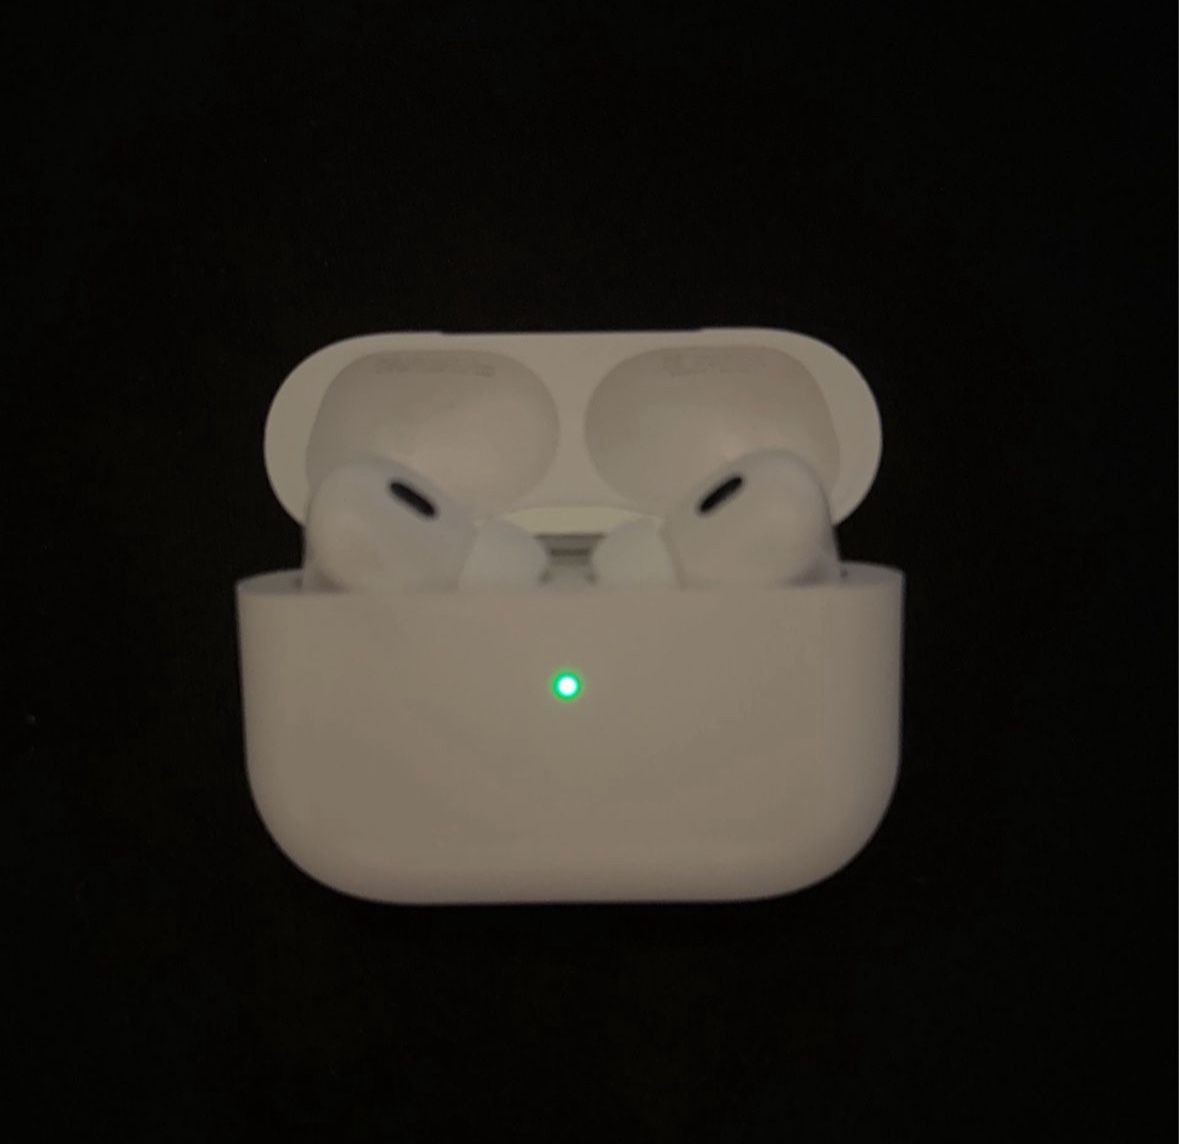 Apple Airpod Pros 2 (slightly used)